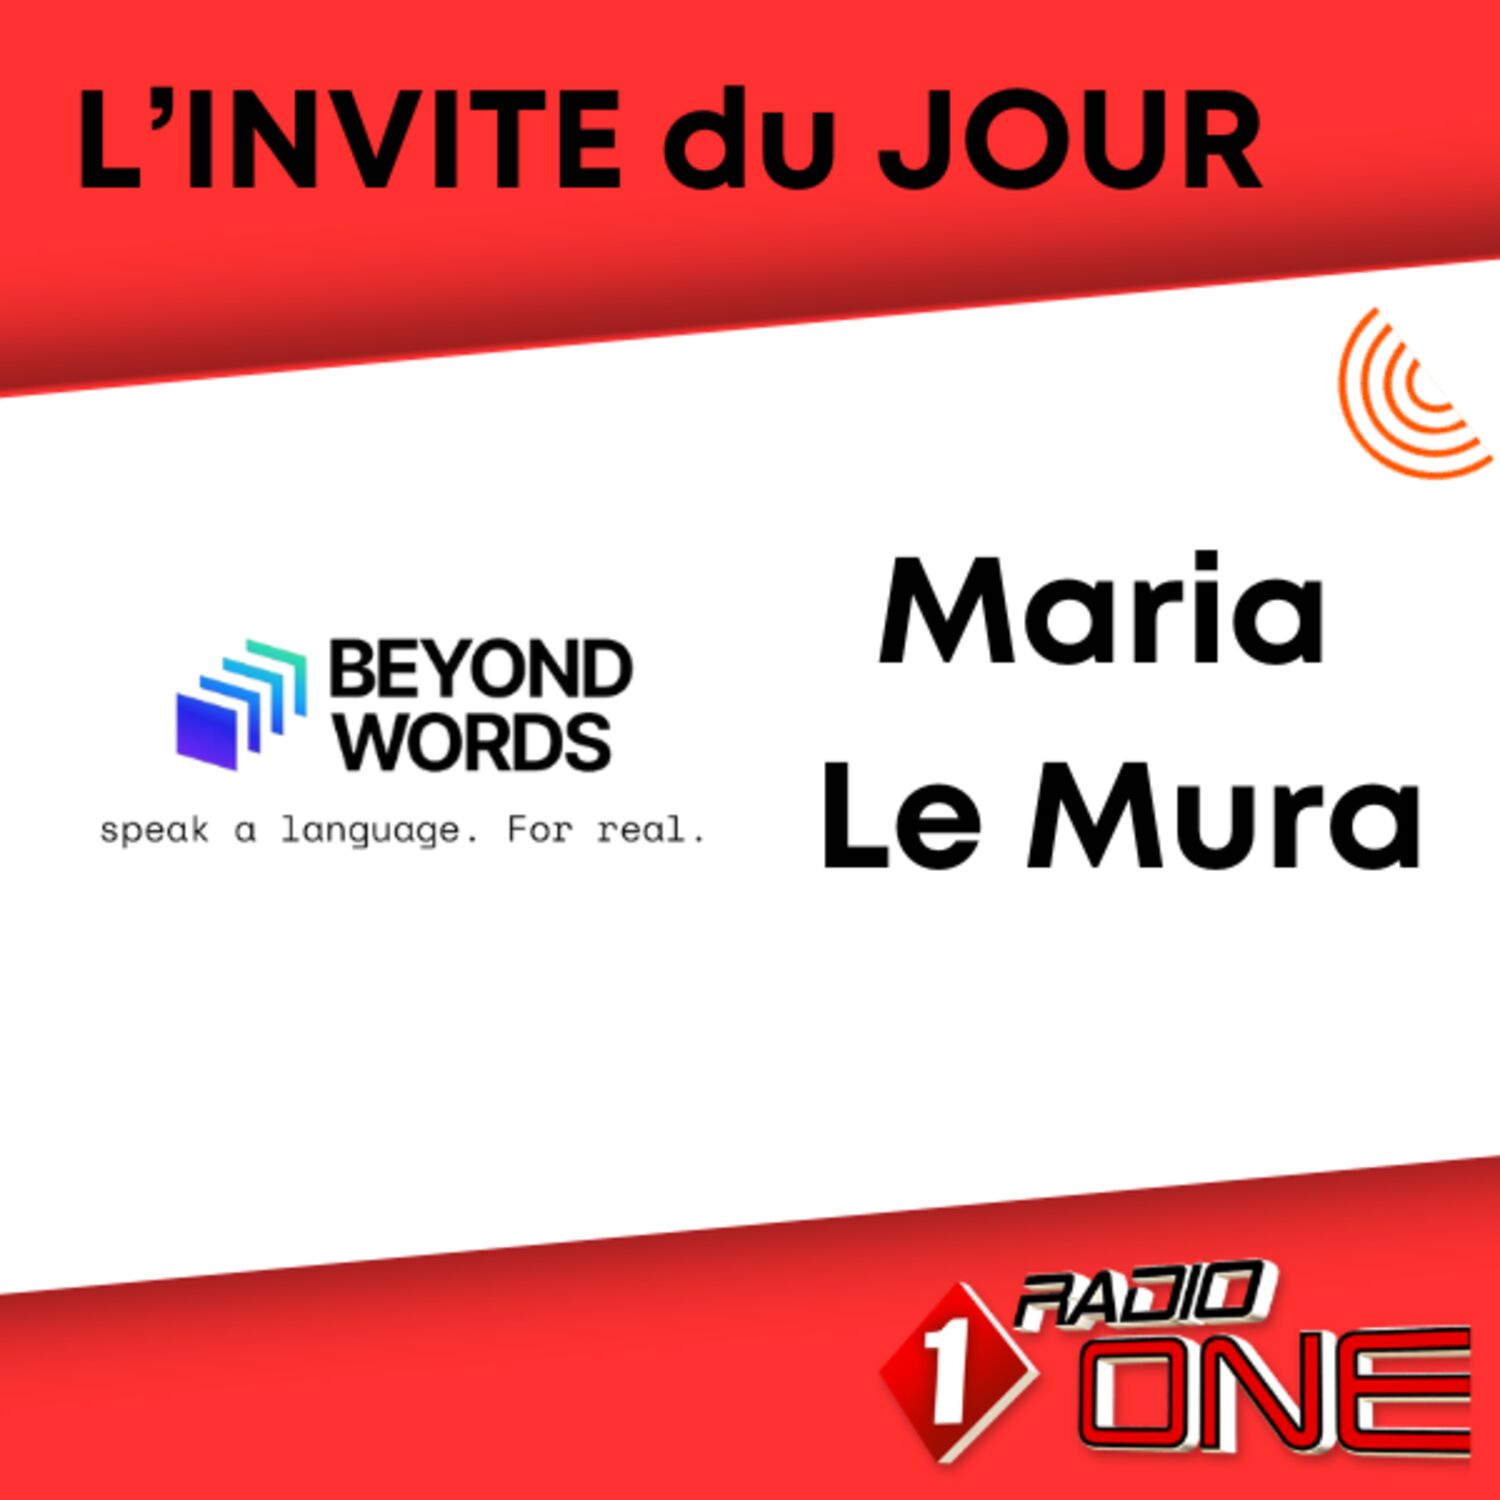 Maria Le Mura - Beyond Words